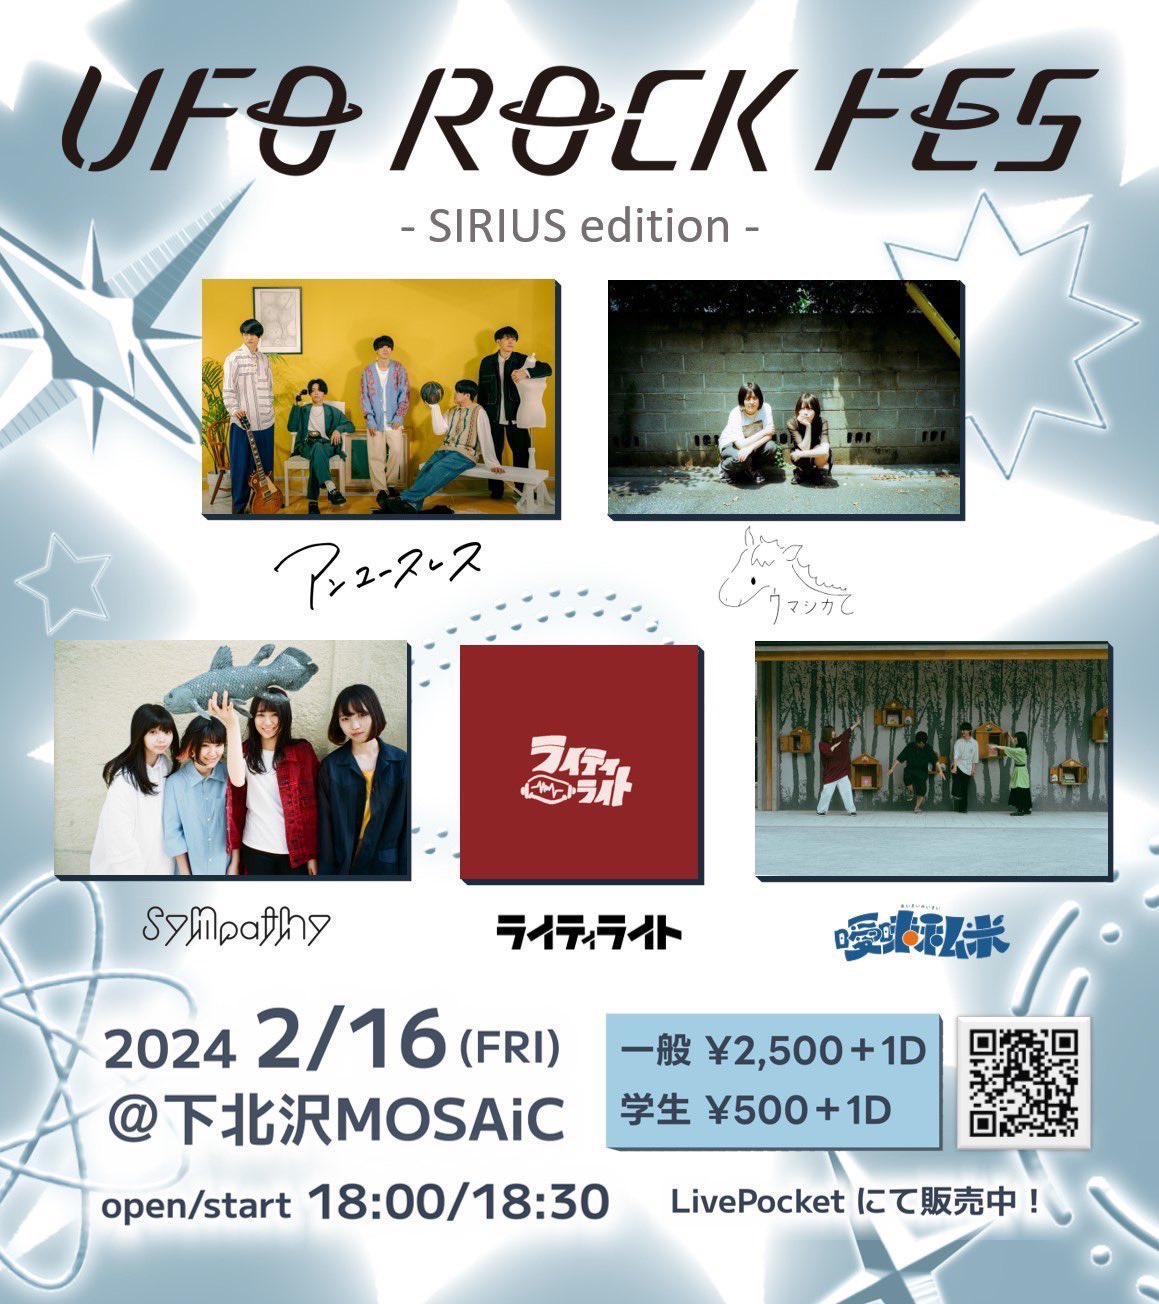 UFO ROCK FES (@ufo_rock_fes) / X